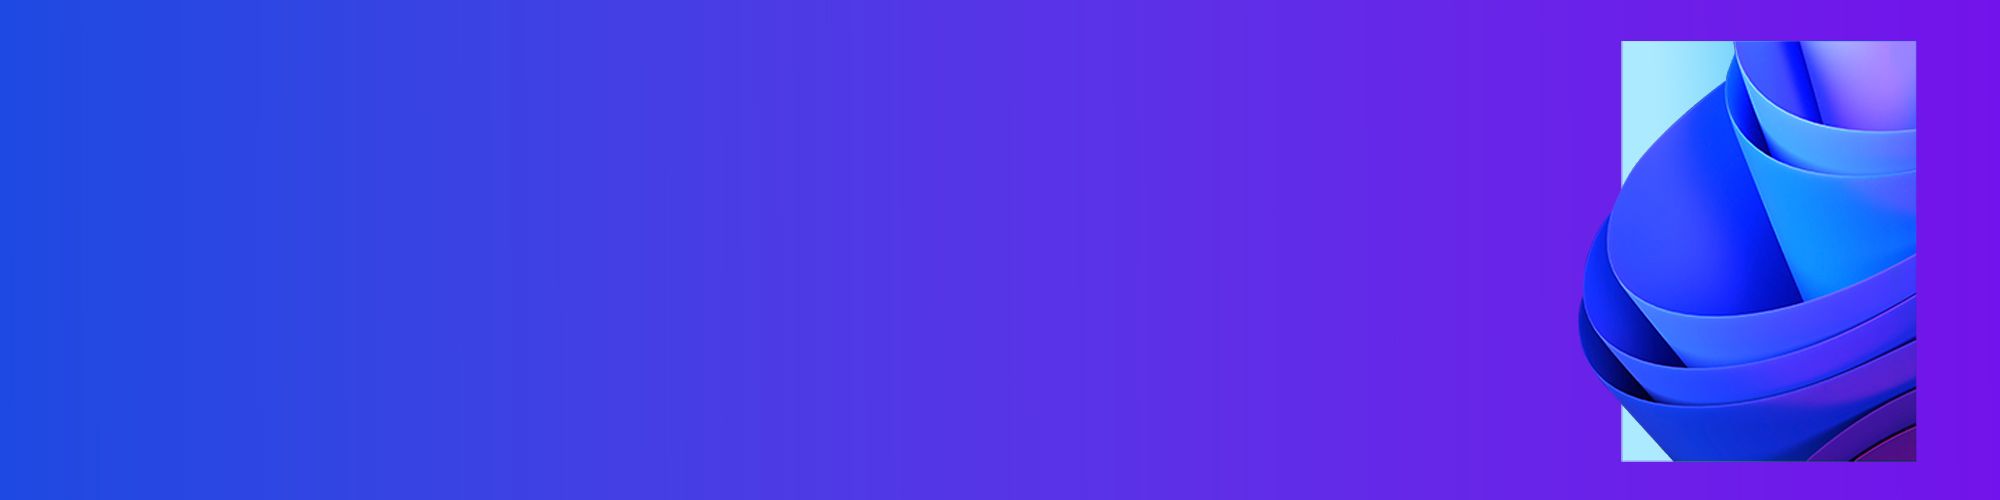 blue waves on purple background